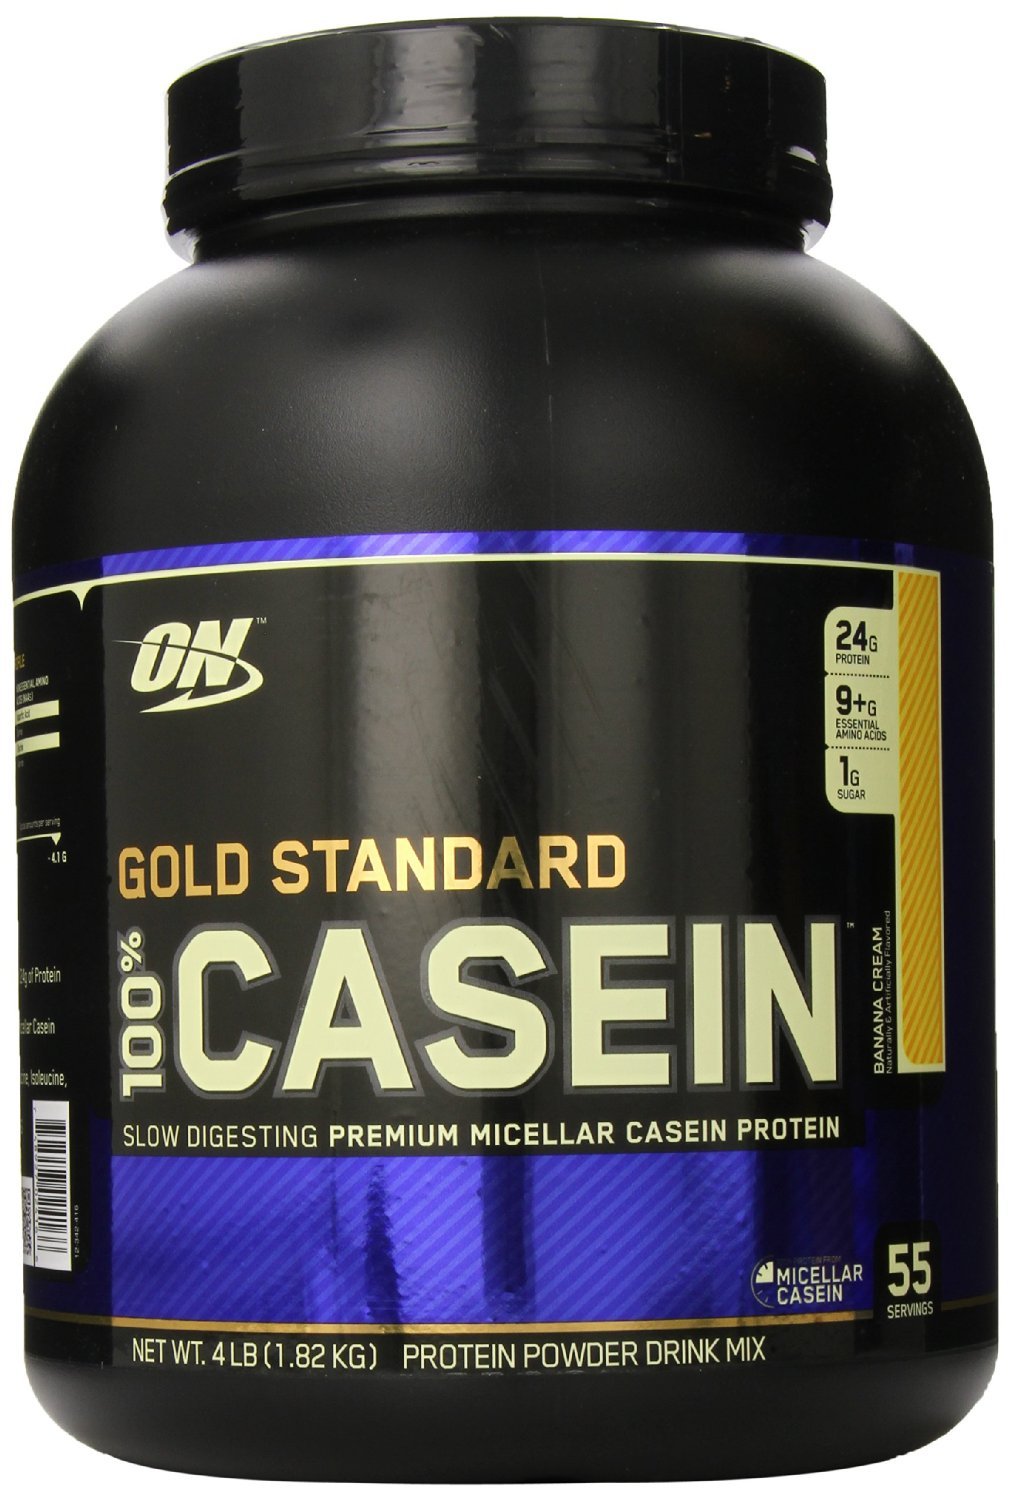 Gold Standart 100% Casein, 1800 g, Optimum Nutrition. Casein. Weight Loss 